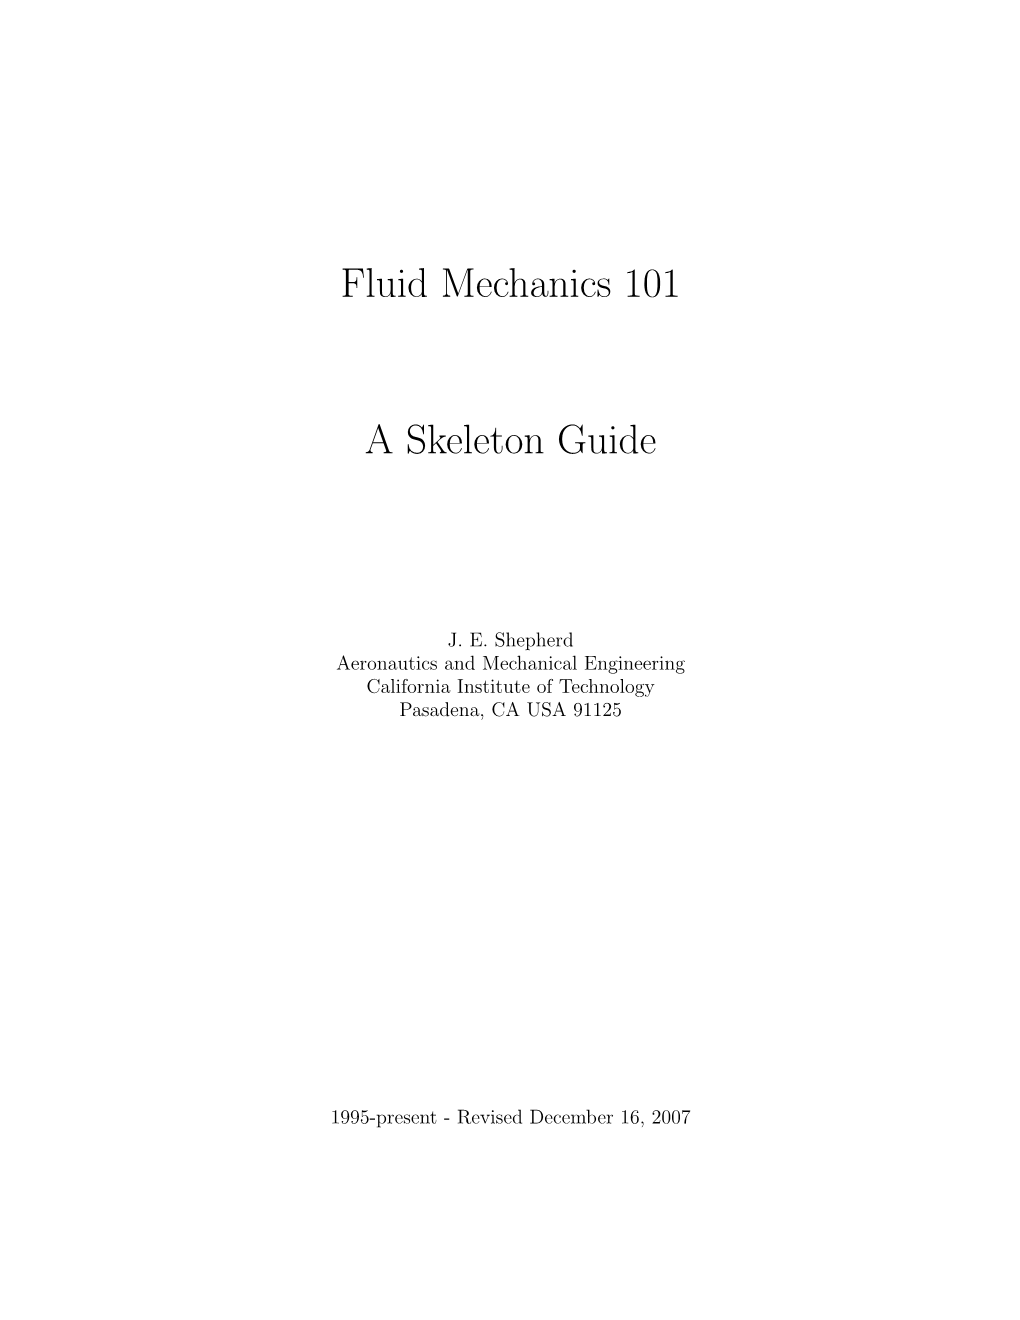 Fluid Mechanics 101 a Skeleton Guide